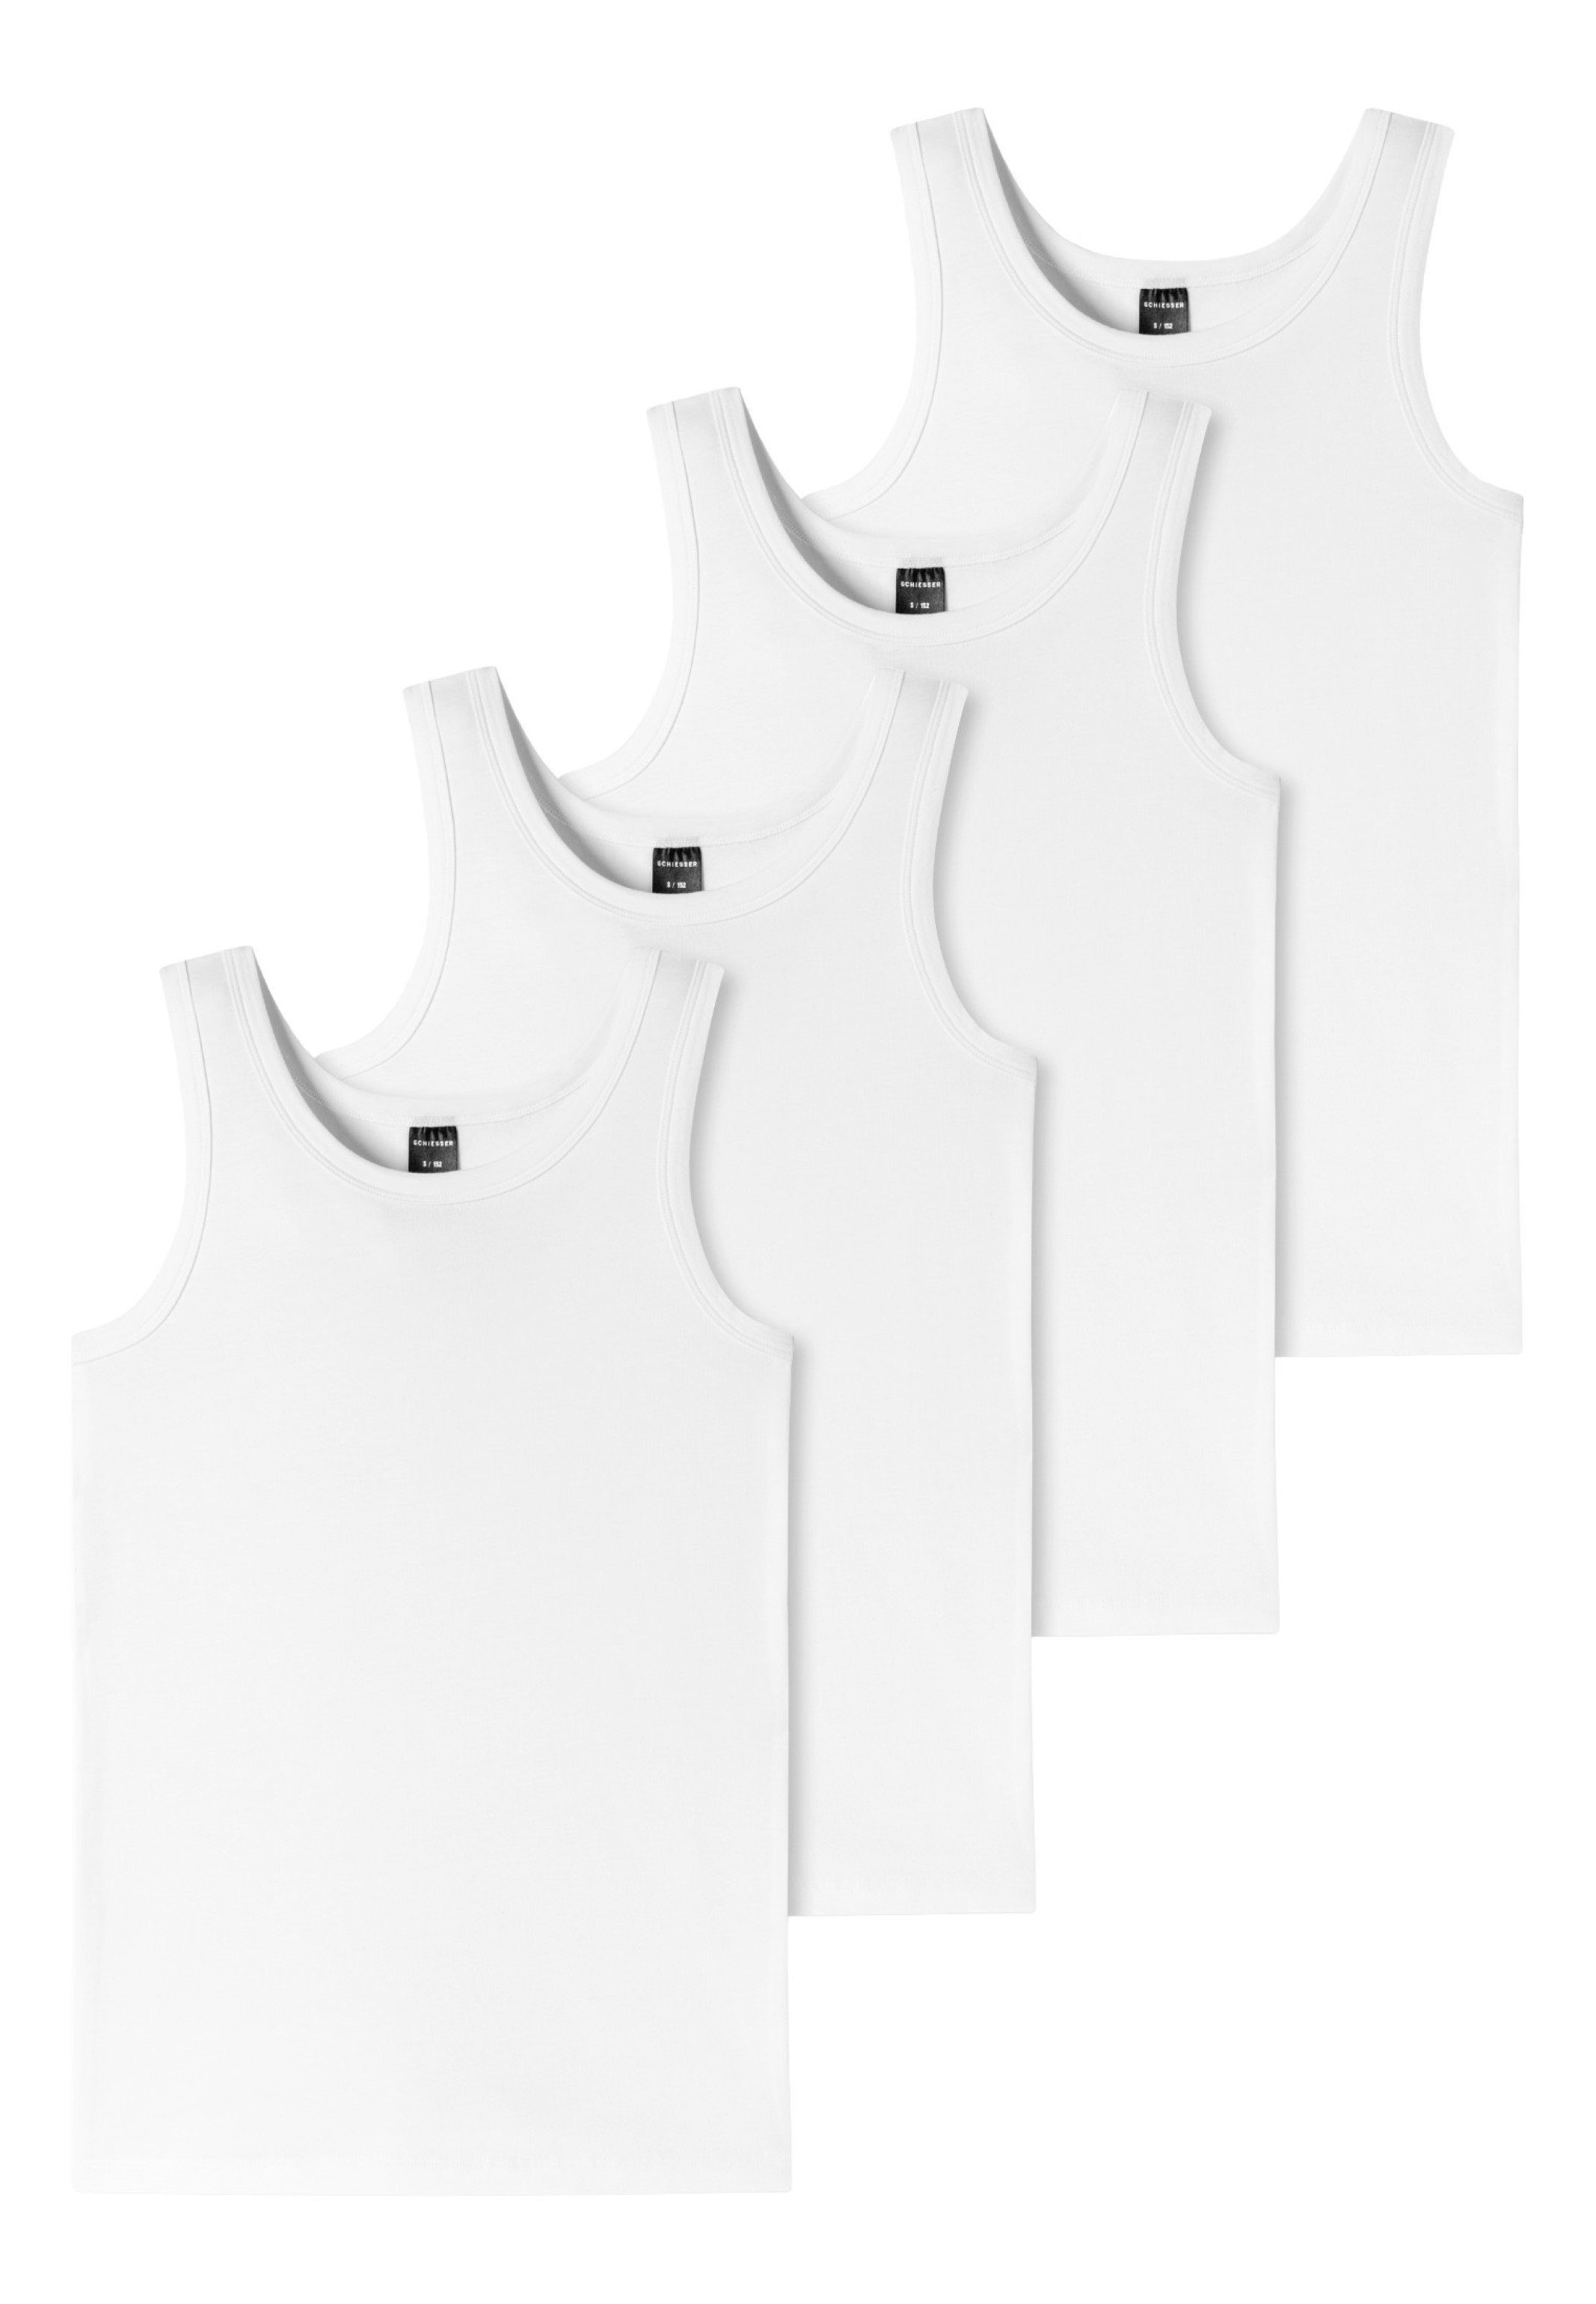 - Teens Baumwolle 4er Organic Unterhemd Boys 95/5 Unterhemd (Spar-Set, - Tanktop Weiß 4-St) Cotton Runder / Schiesser Halsausschnitt Pack